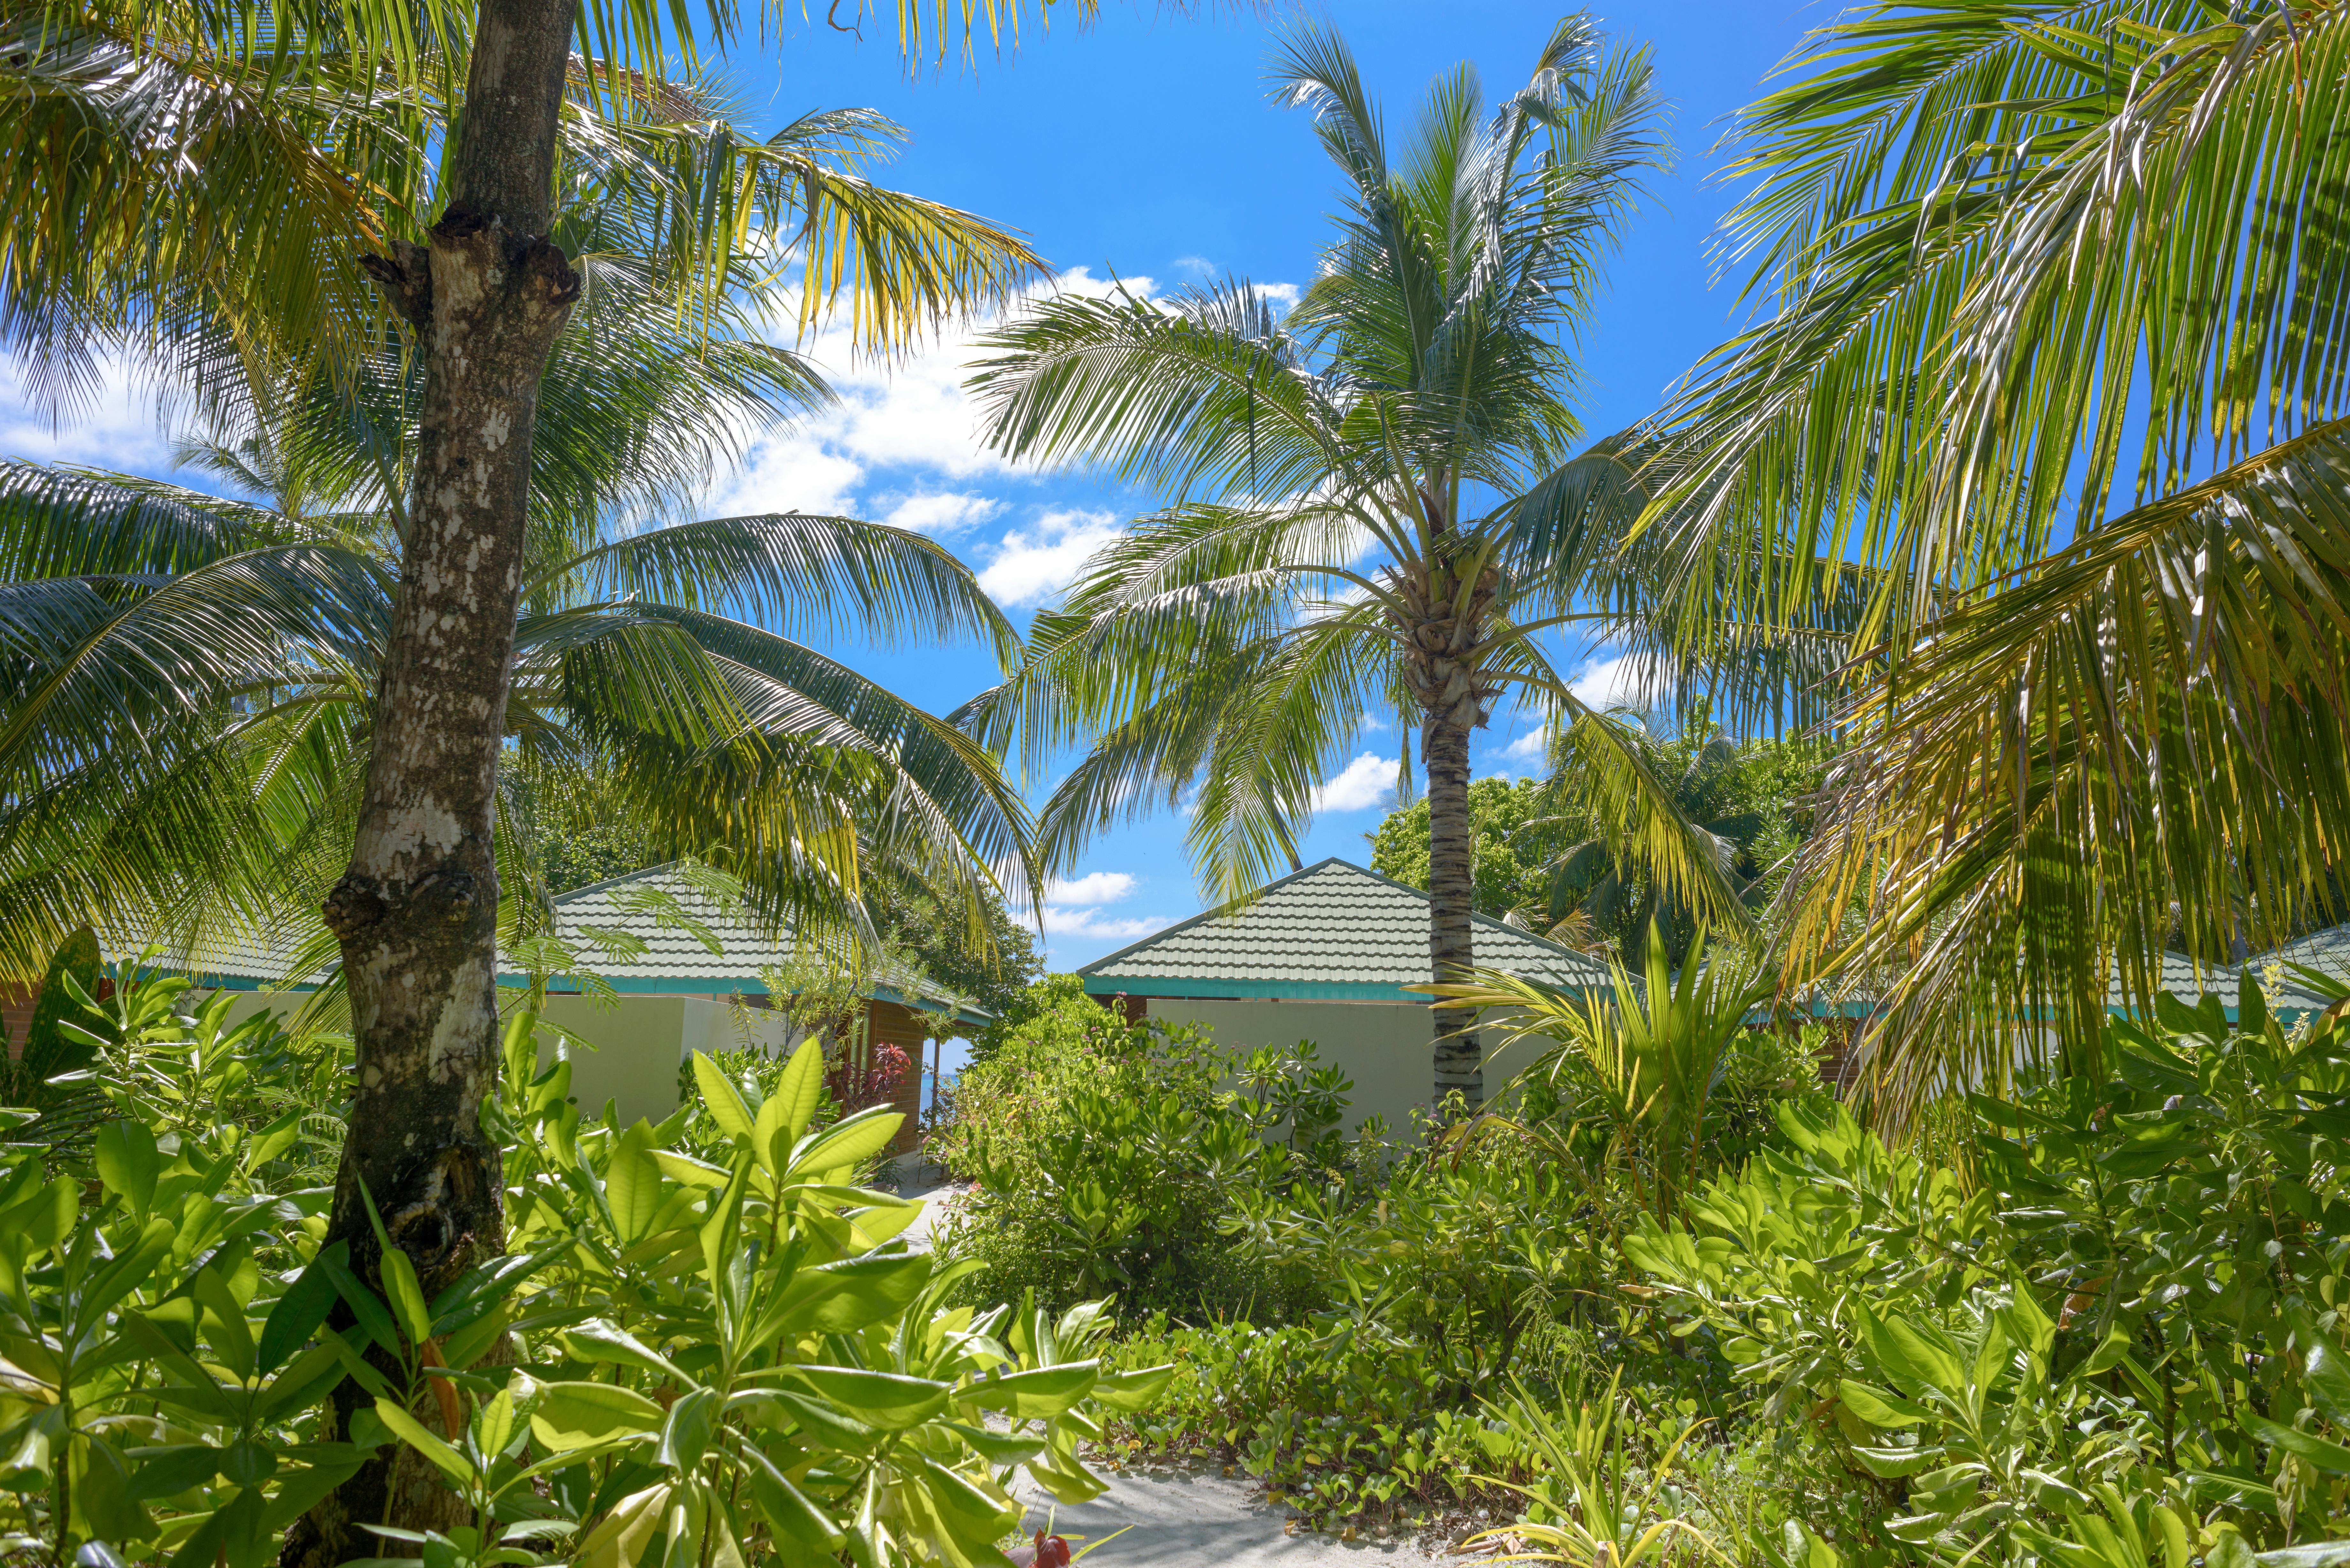 Photo of Palm Trees Near Houses · Free Stock Photo